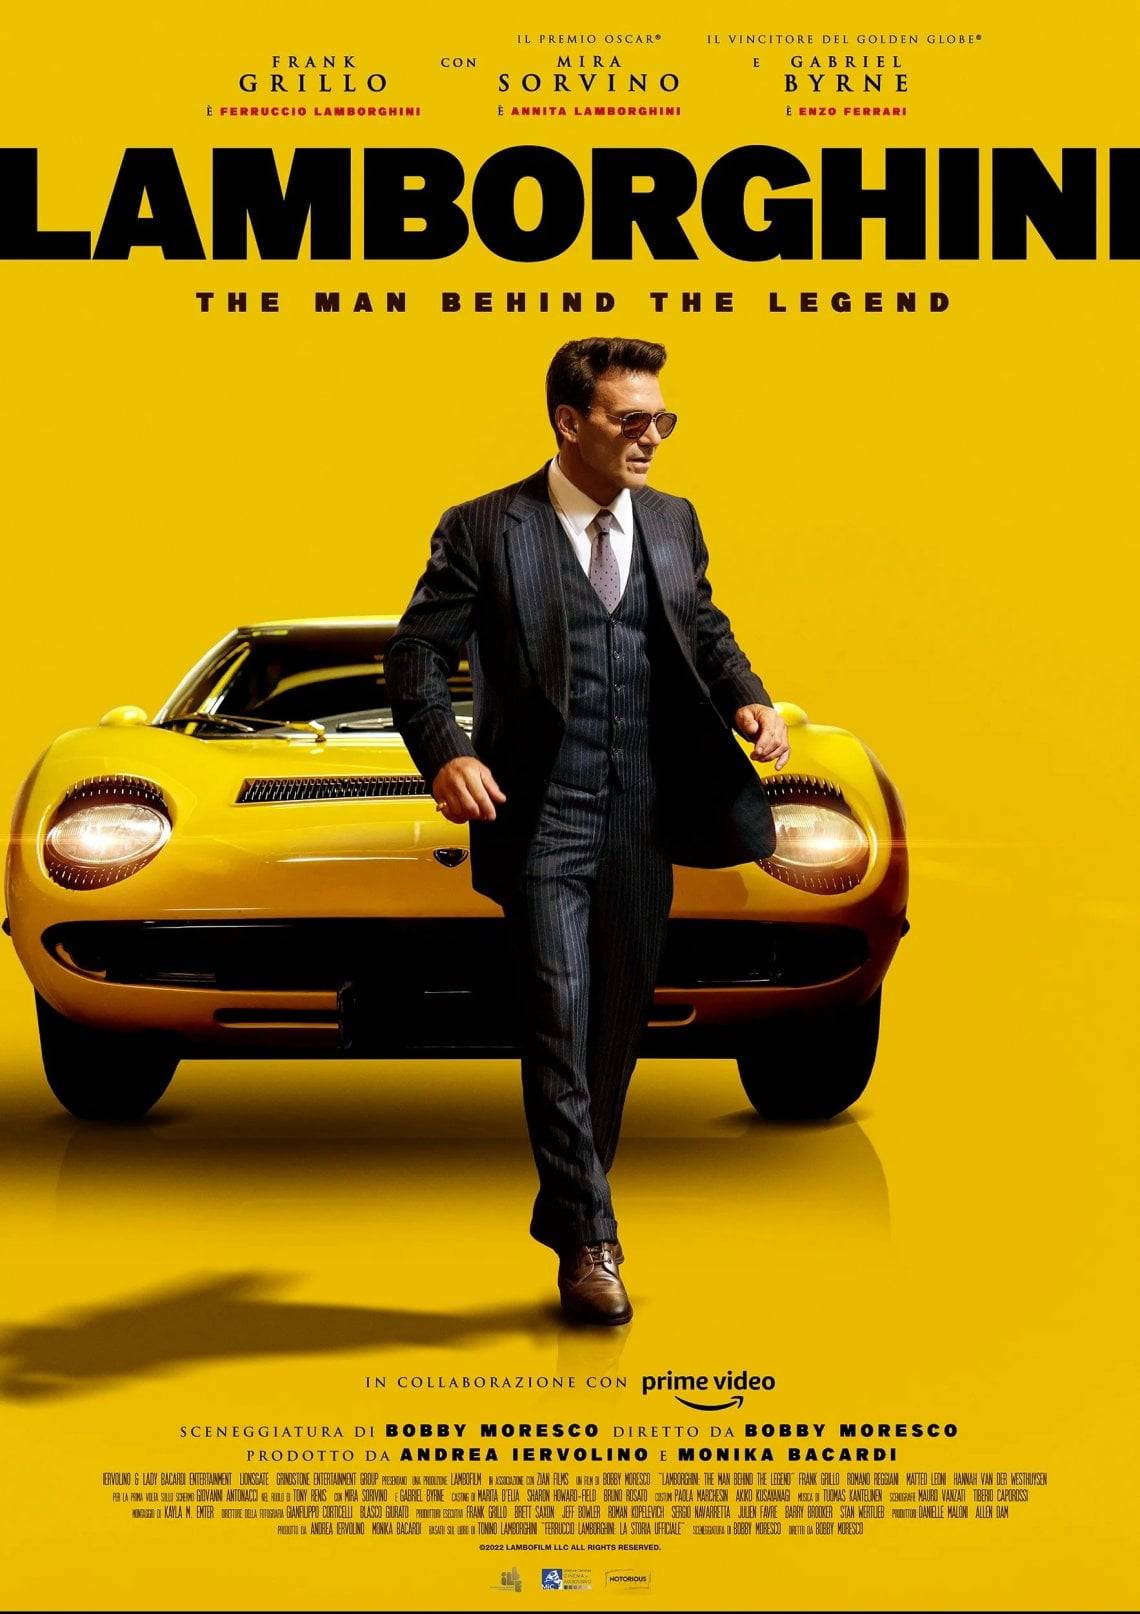 image 3 1 - “Lamborghini - The Man behind the legend”. Lorenzo Viganò interpreta il protagonista